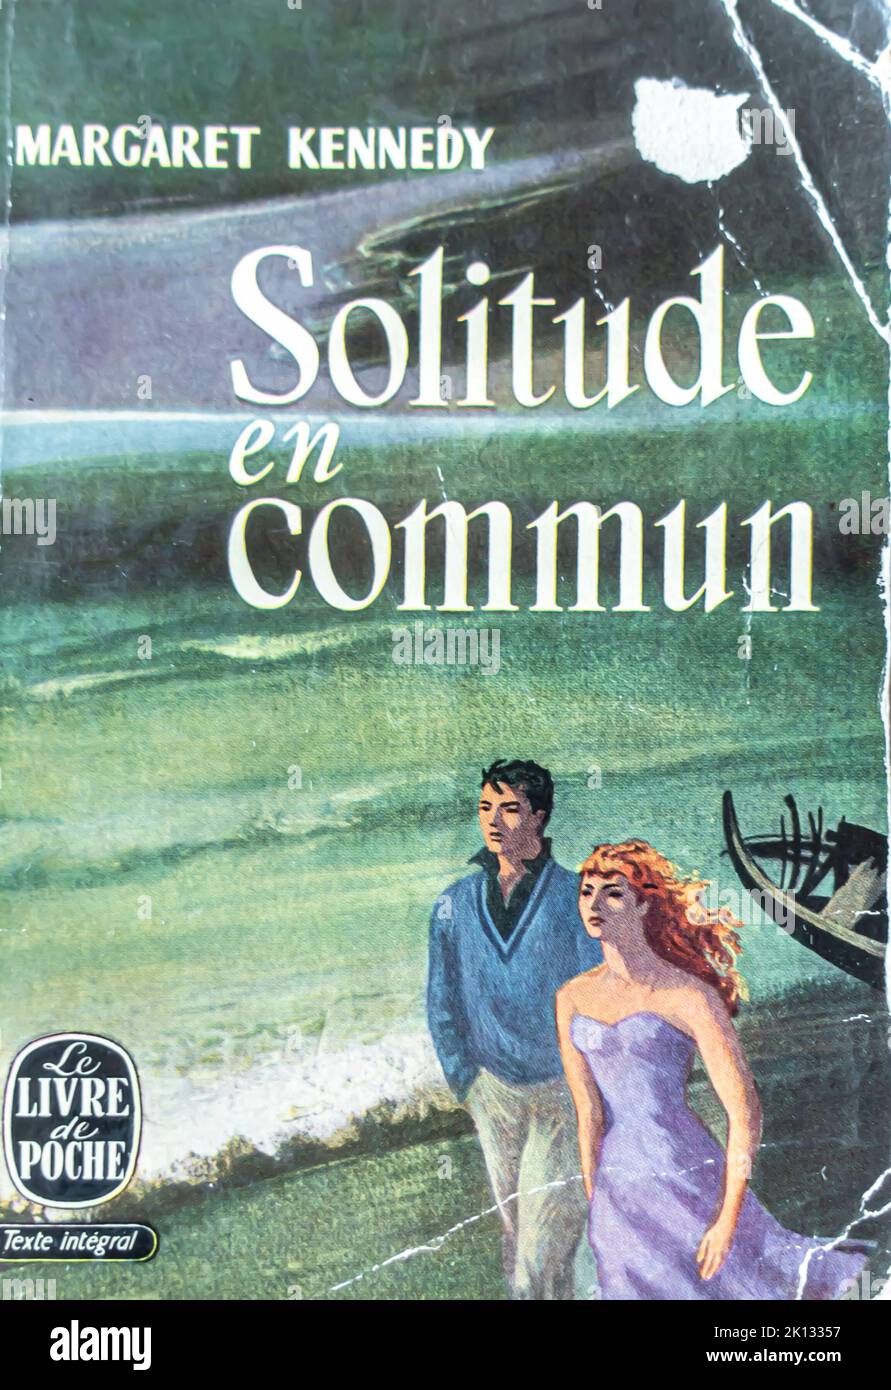 Solitude en commun:- Margaret Kennedy. 1955 ; Language. French ; Publisher. Livre de Poche ; Publication date. January 1, 1955. First edition Stock Photo